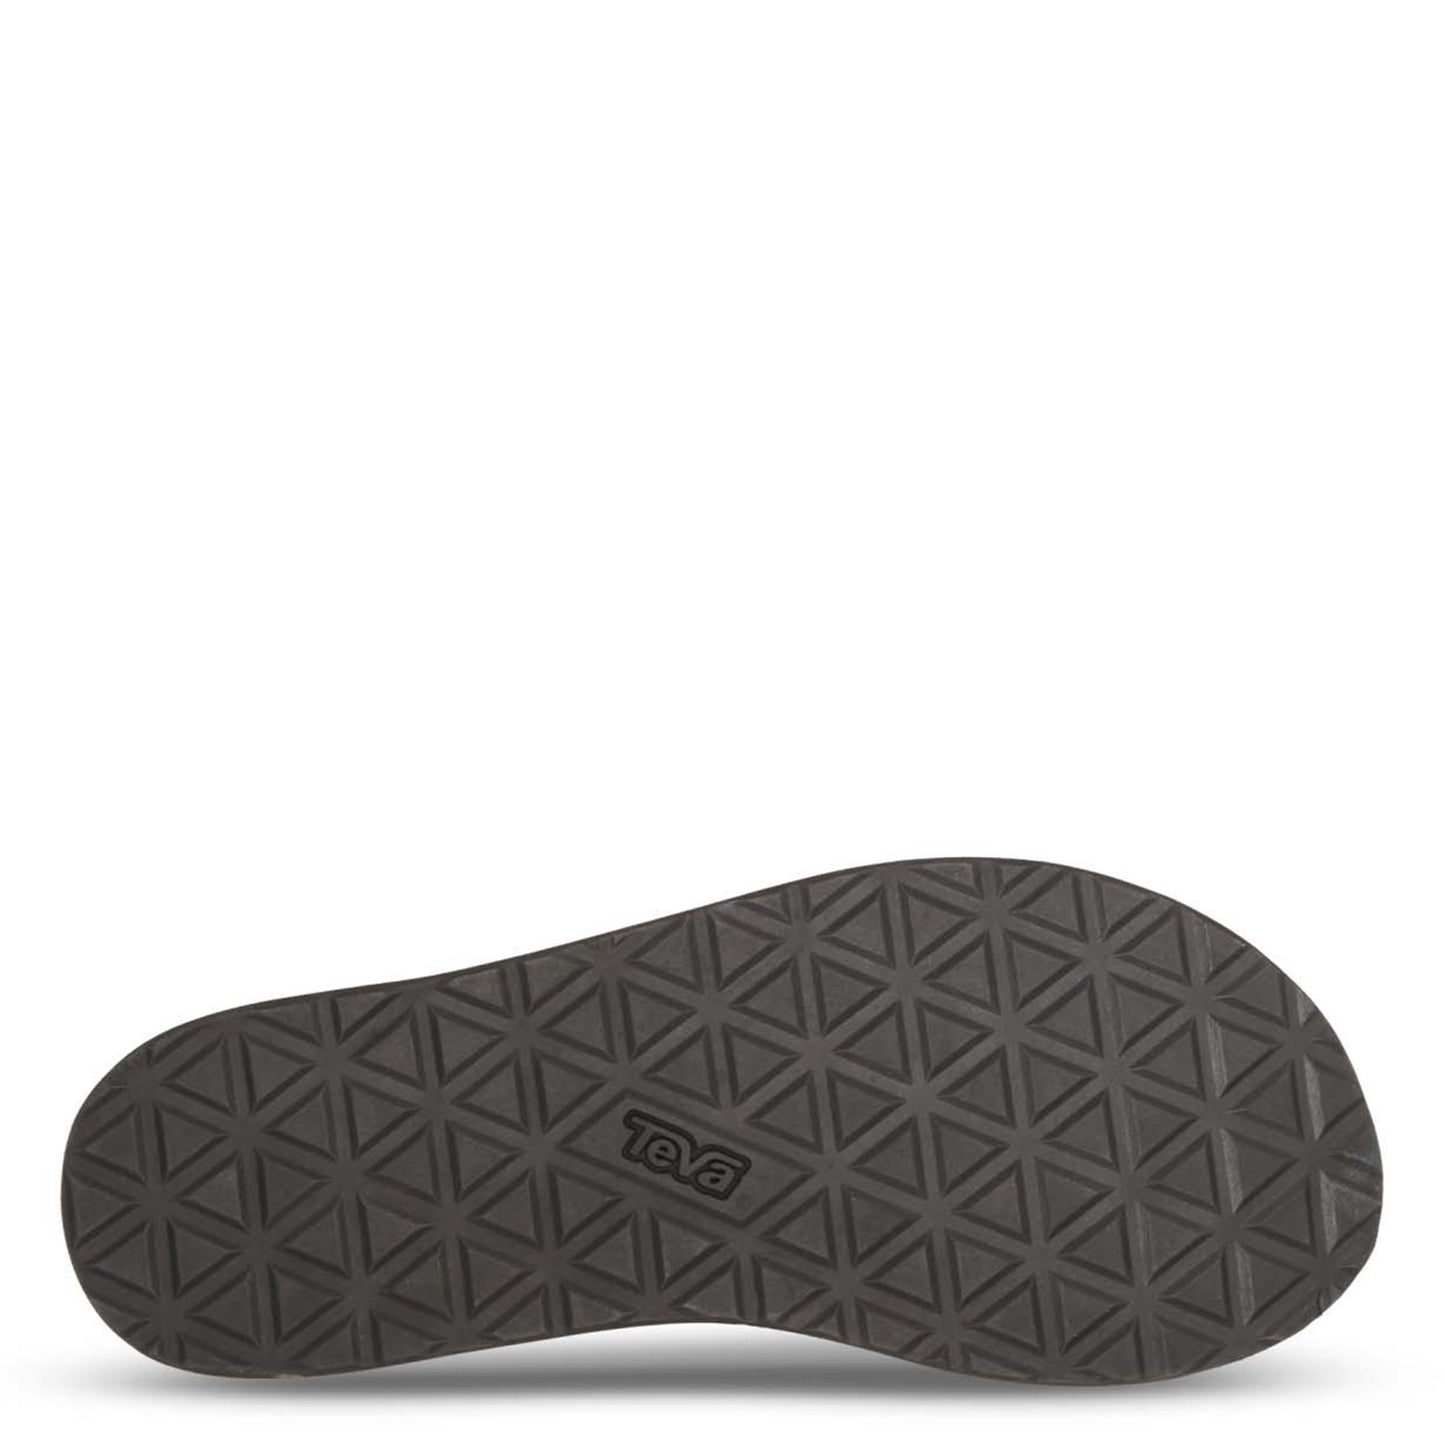 Peltz Shoes  Women's Teva Flatform Universal Sandal Black 1008844-BLK